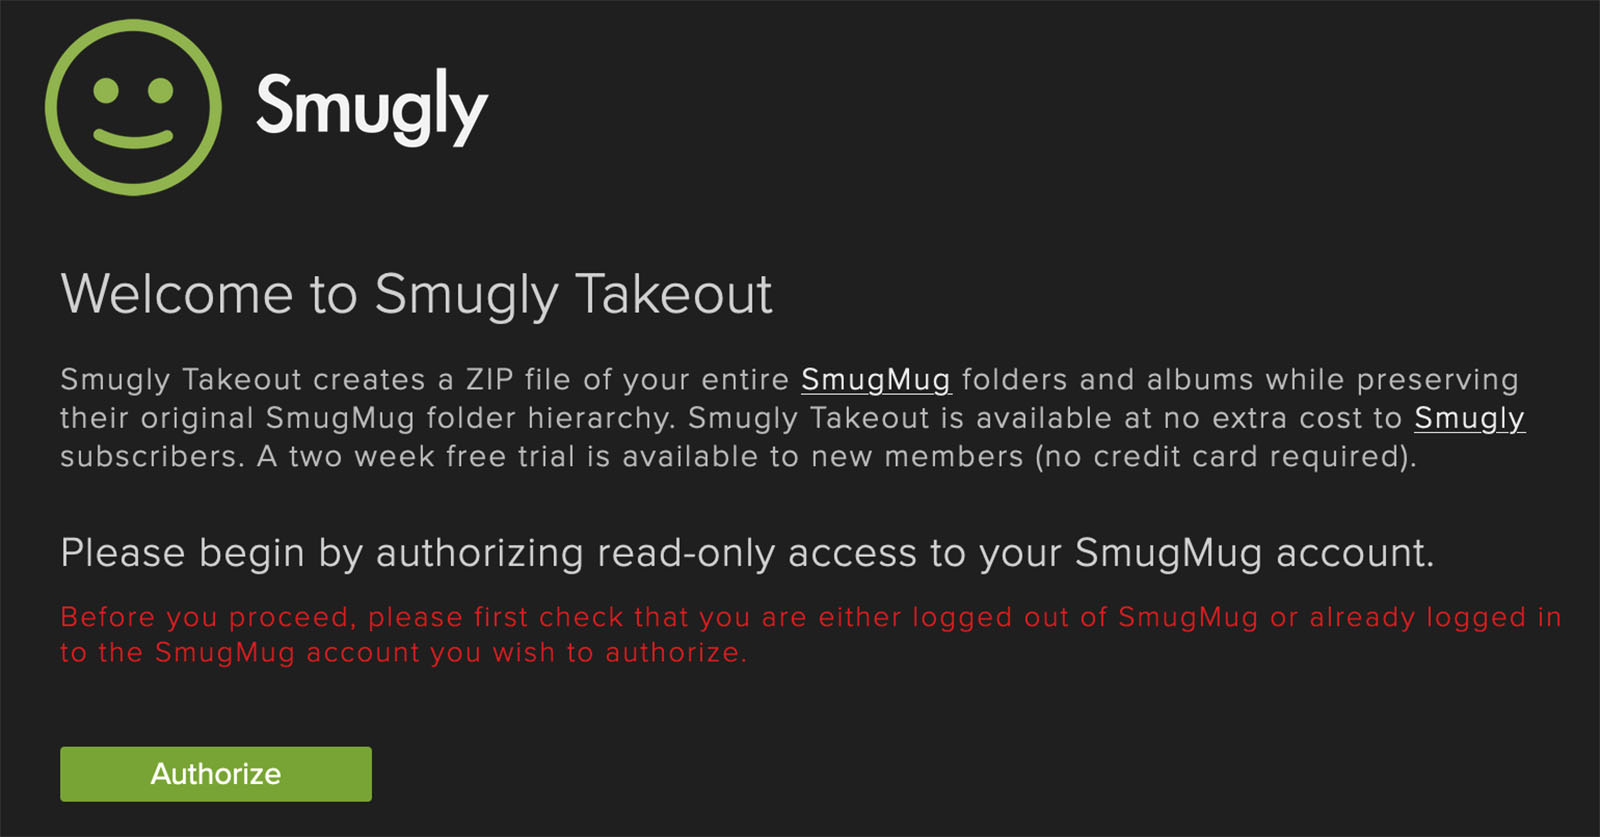 Smugly